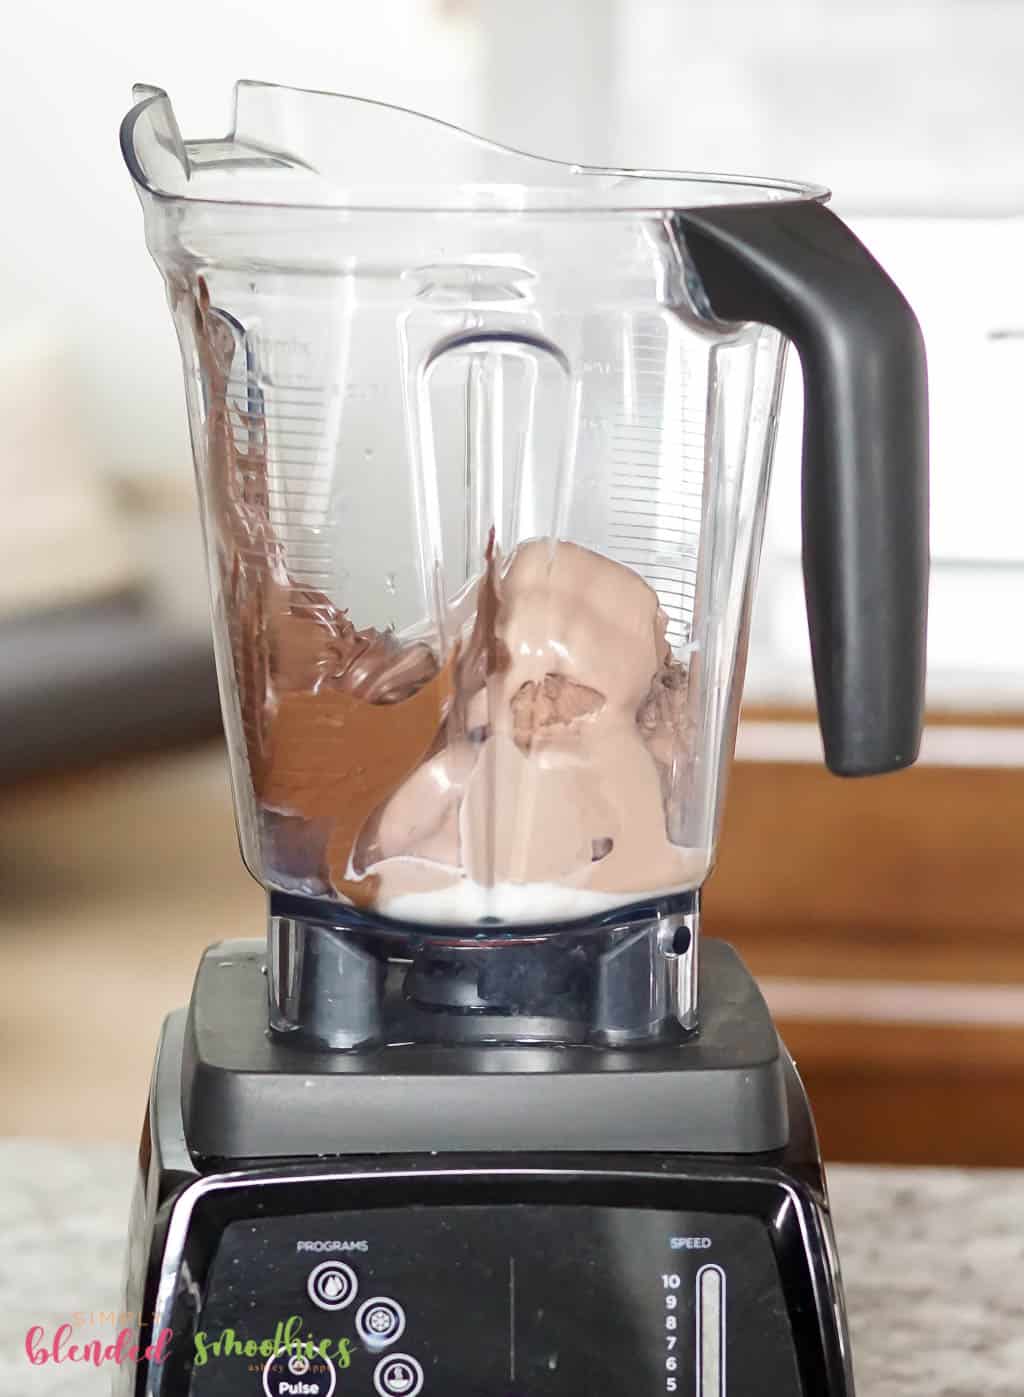 How To Make A Nutella Milkshake